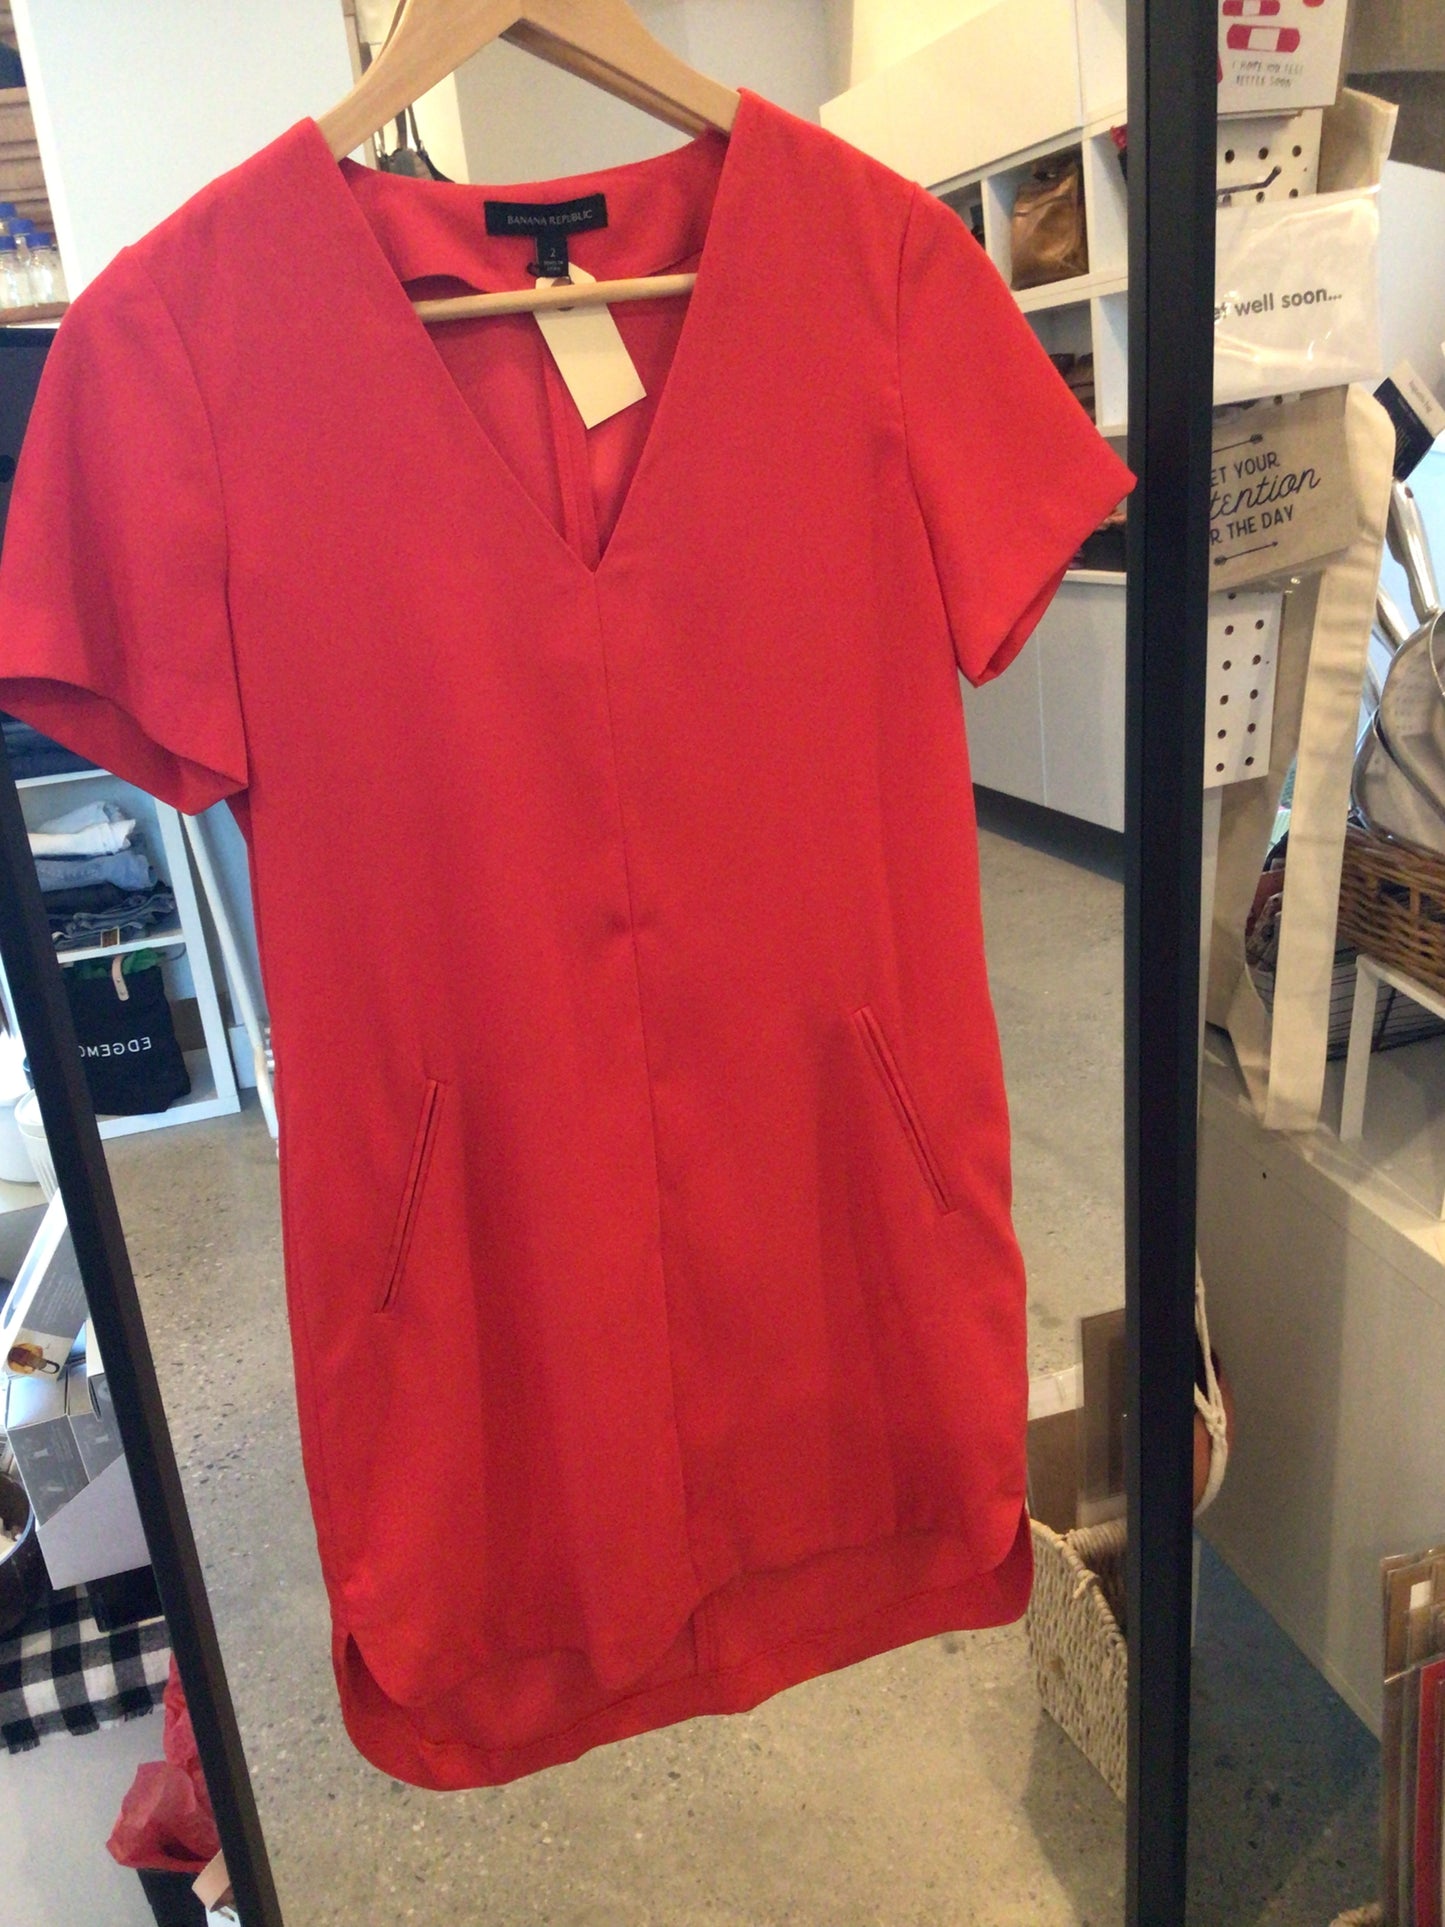 Consignment 0725-13 Banana Republic red sheath dress. Size 2.